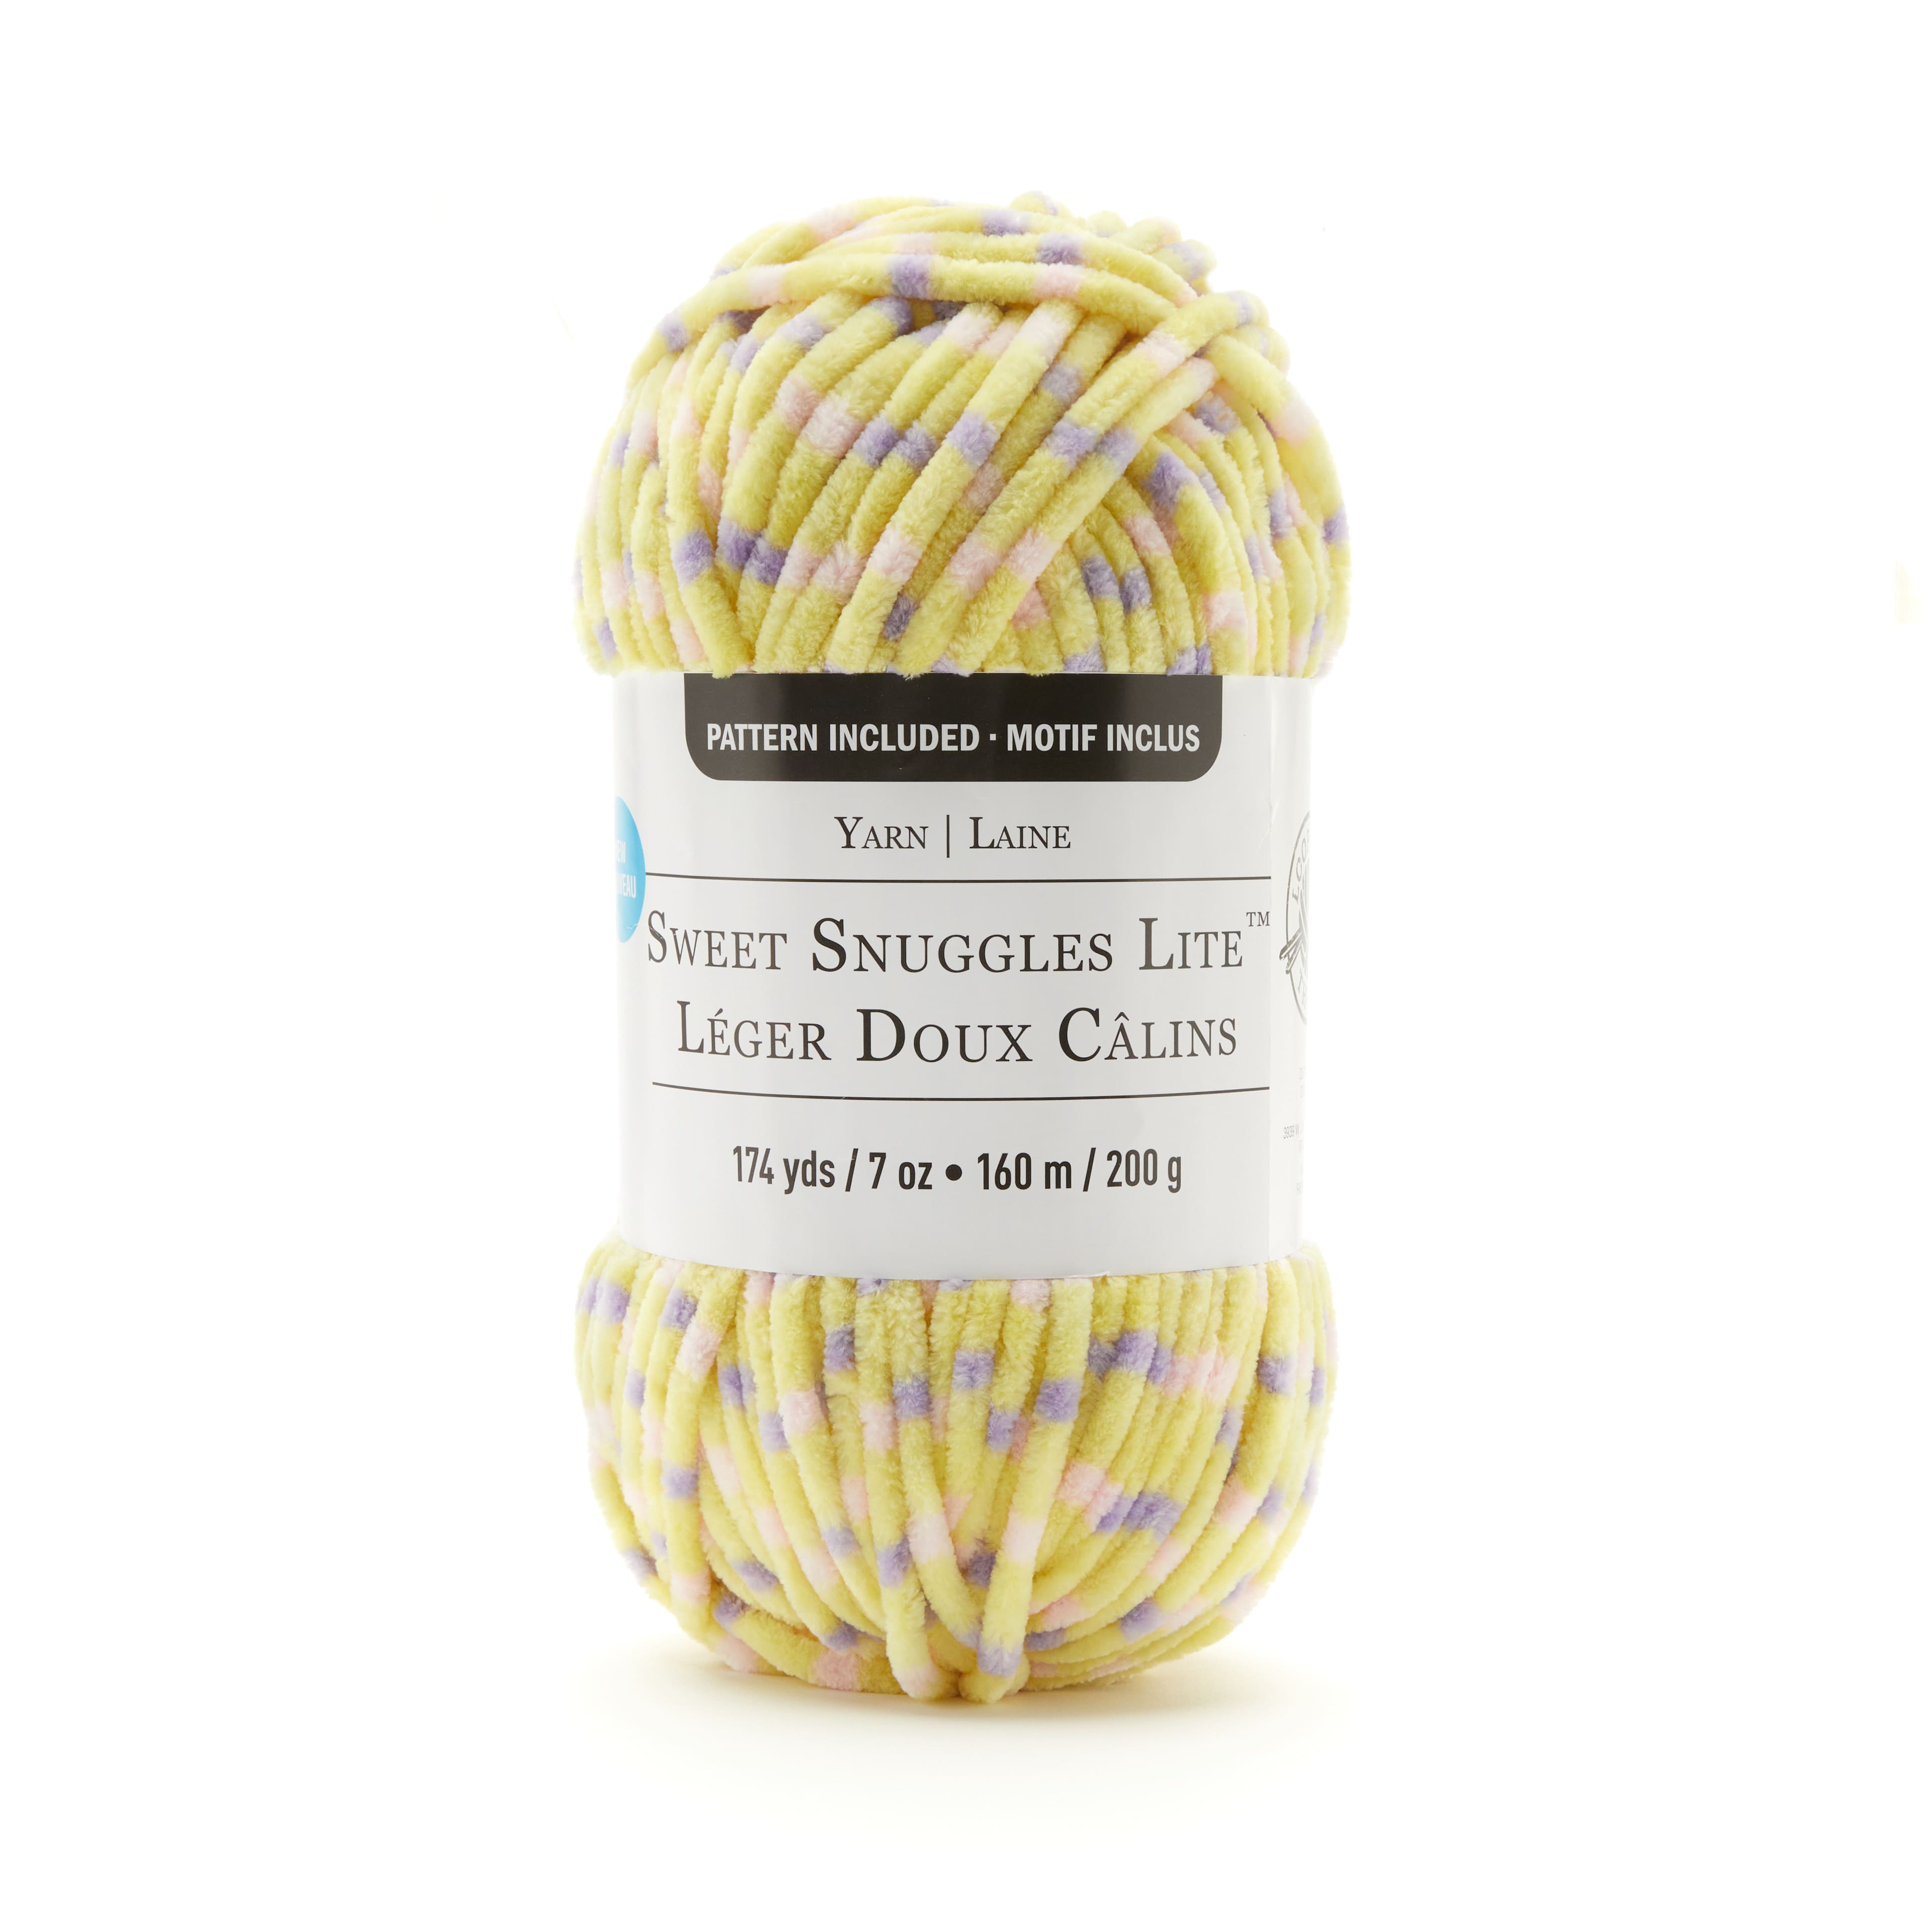 Sweet Snuggles Lite™ Variegated Striped Yarn by Loops & Threads®, Michaels